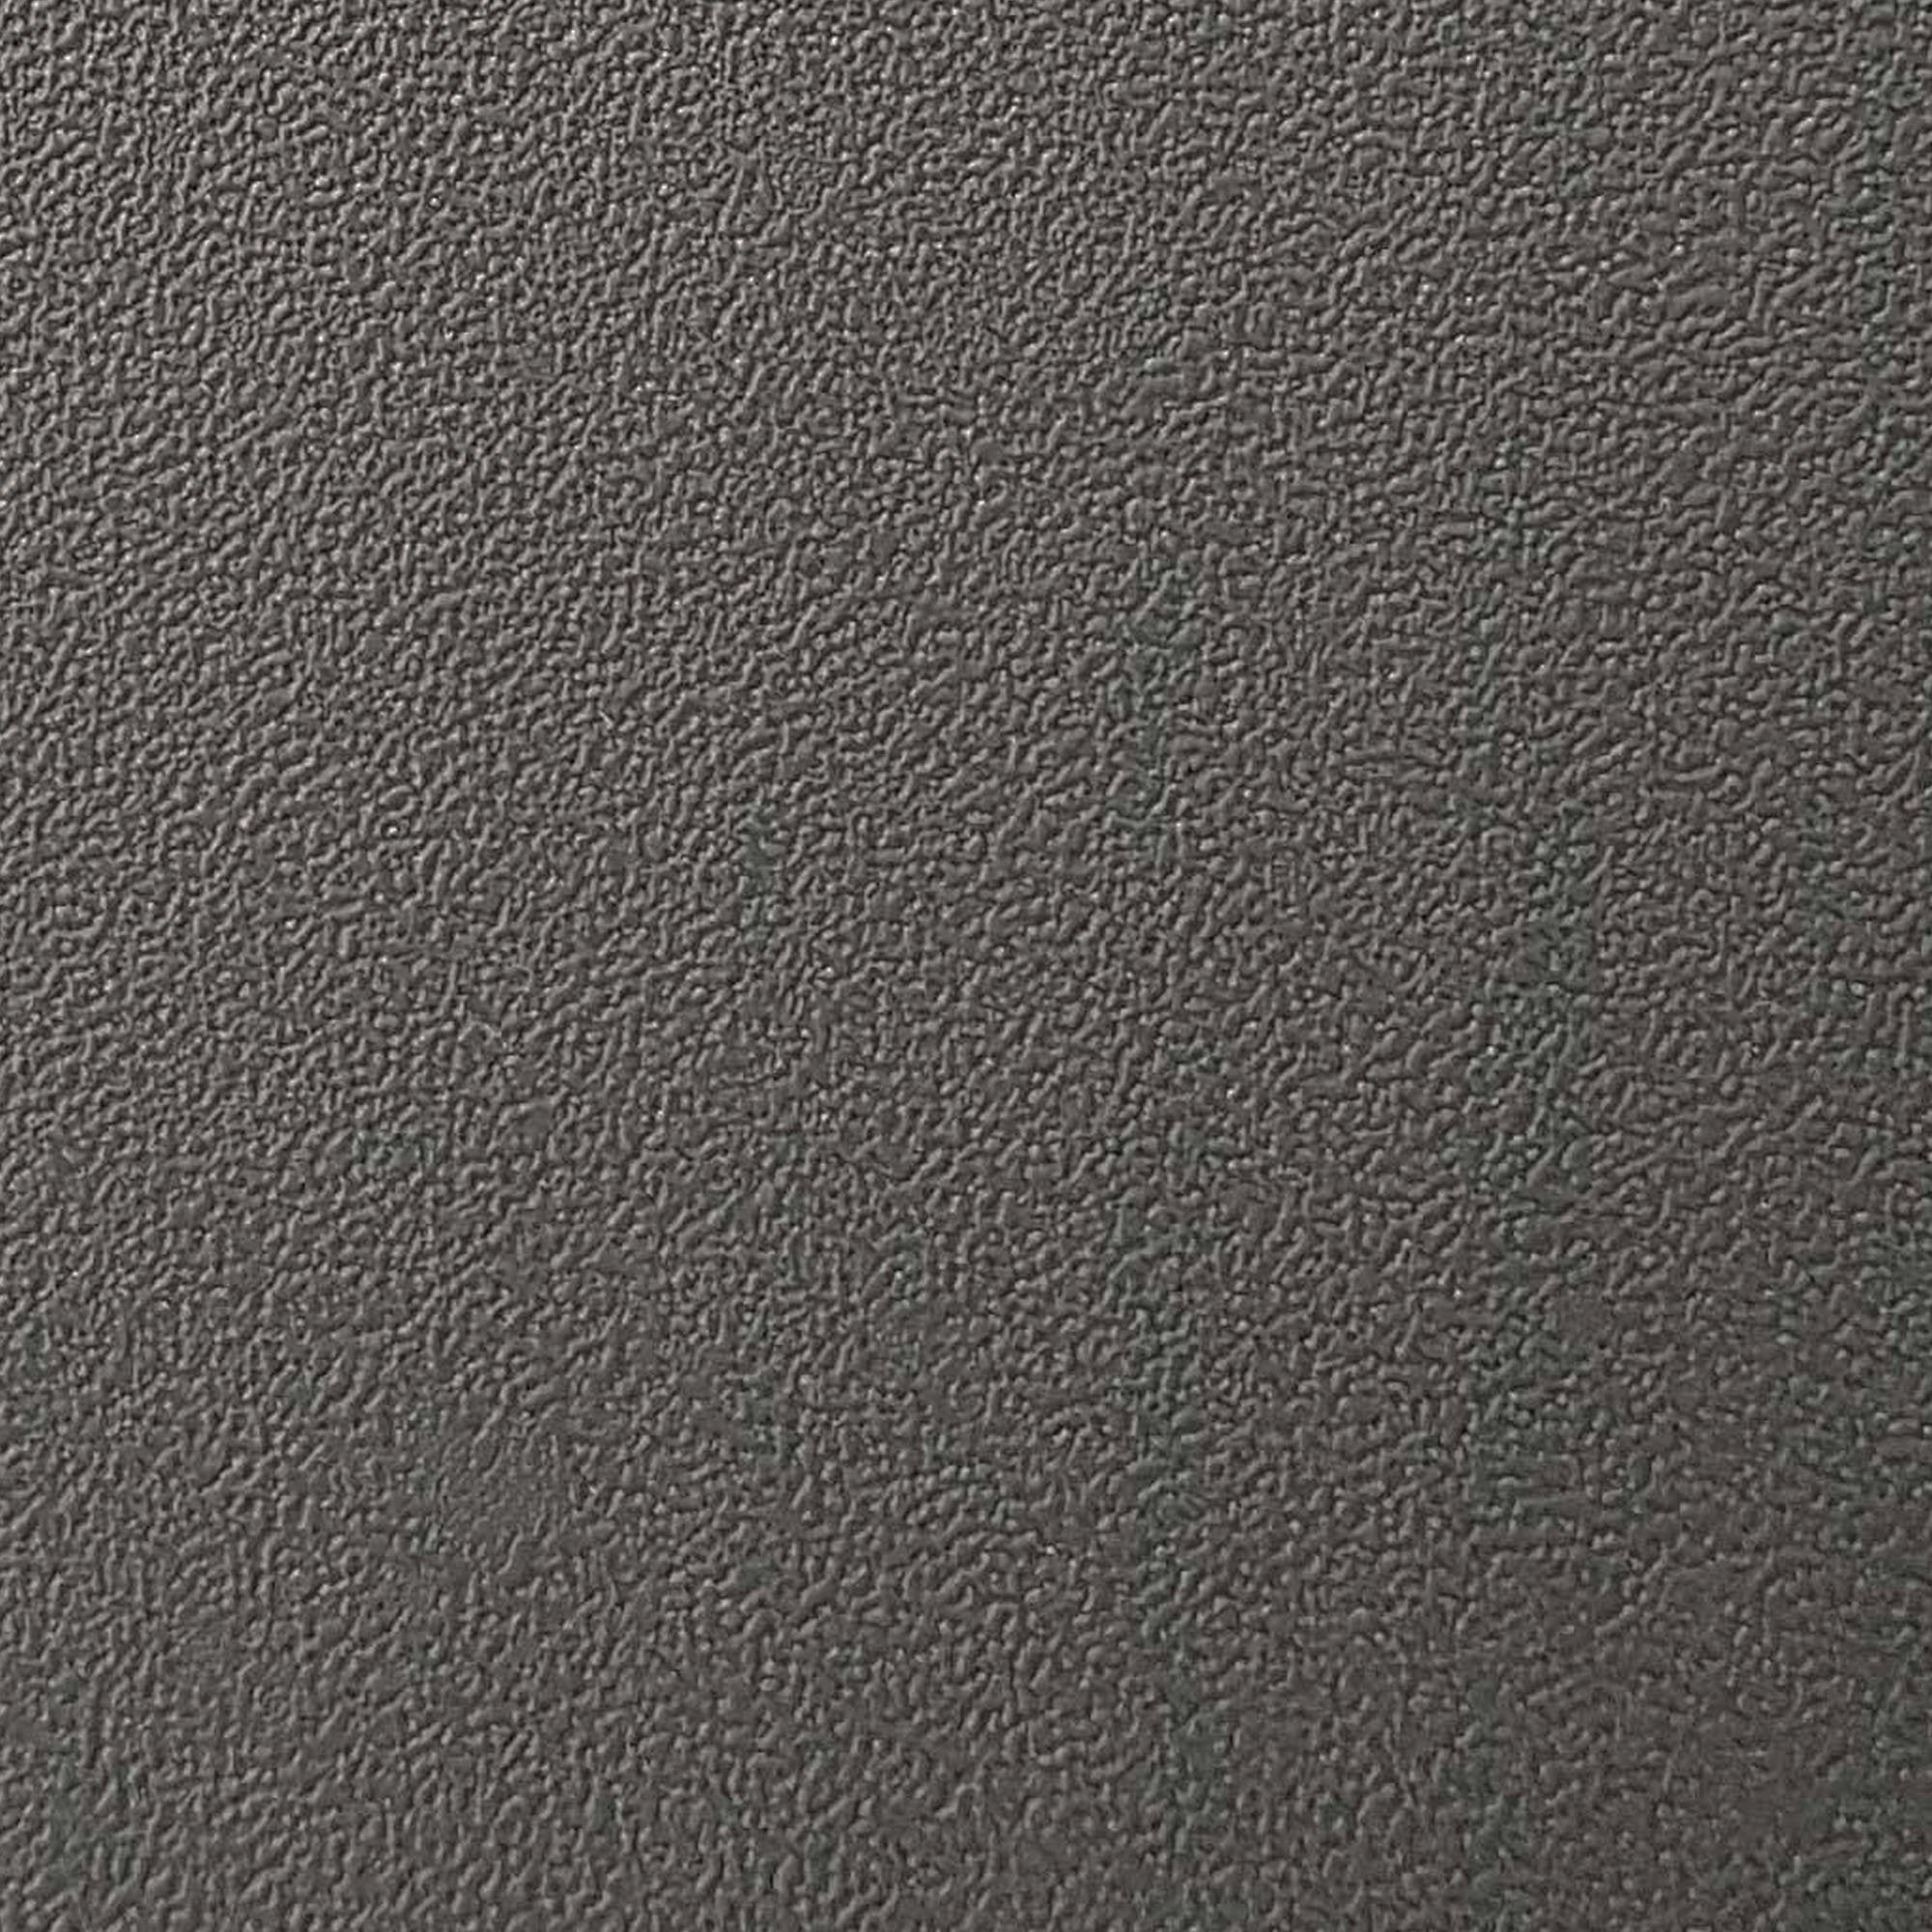 Castle Grey TexturePlus Decorative Wall Panels 2550mm x 500mm x 9mm (Pack of 2) - Claddtech